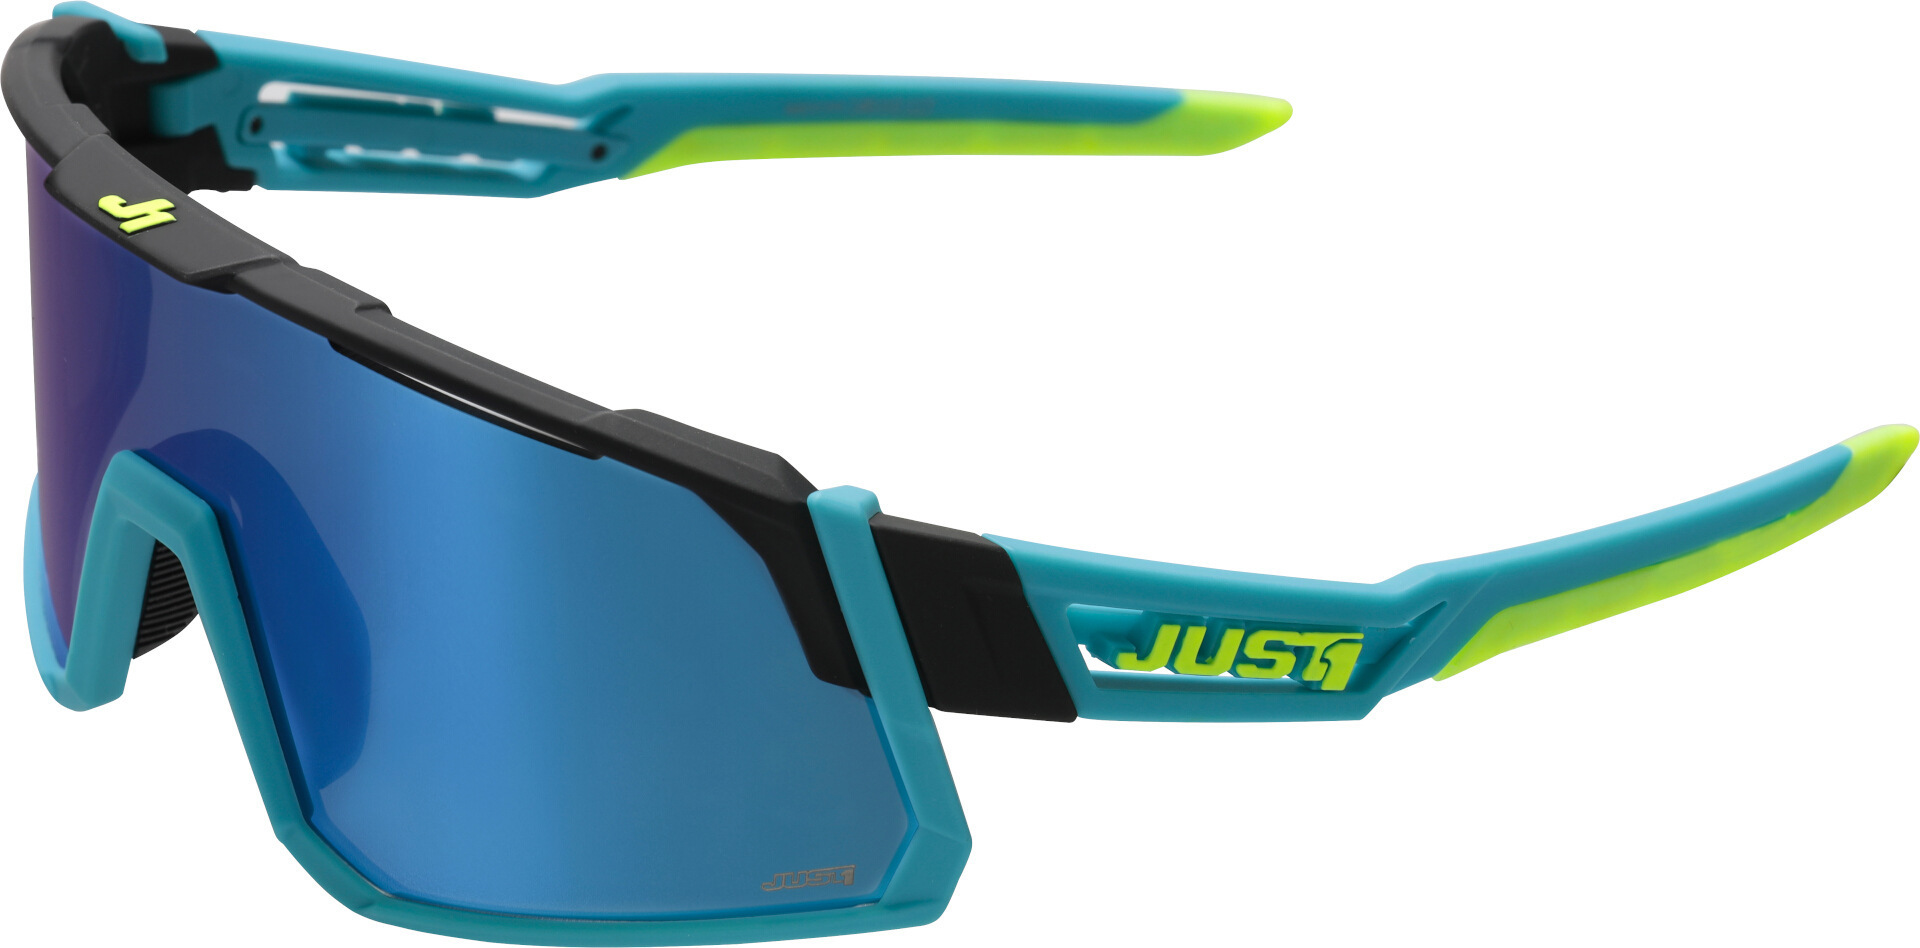 Just1 Sniper Alexey Lutsenko Replica Sunglasses, blue-yellow, blue-yellow, Size One Size